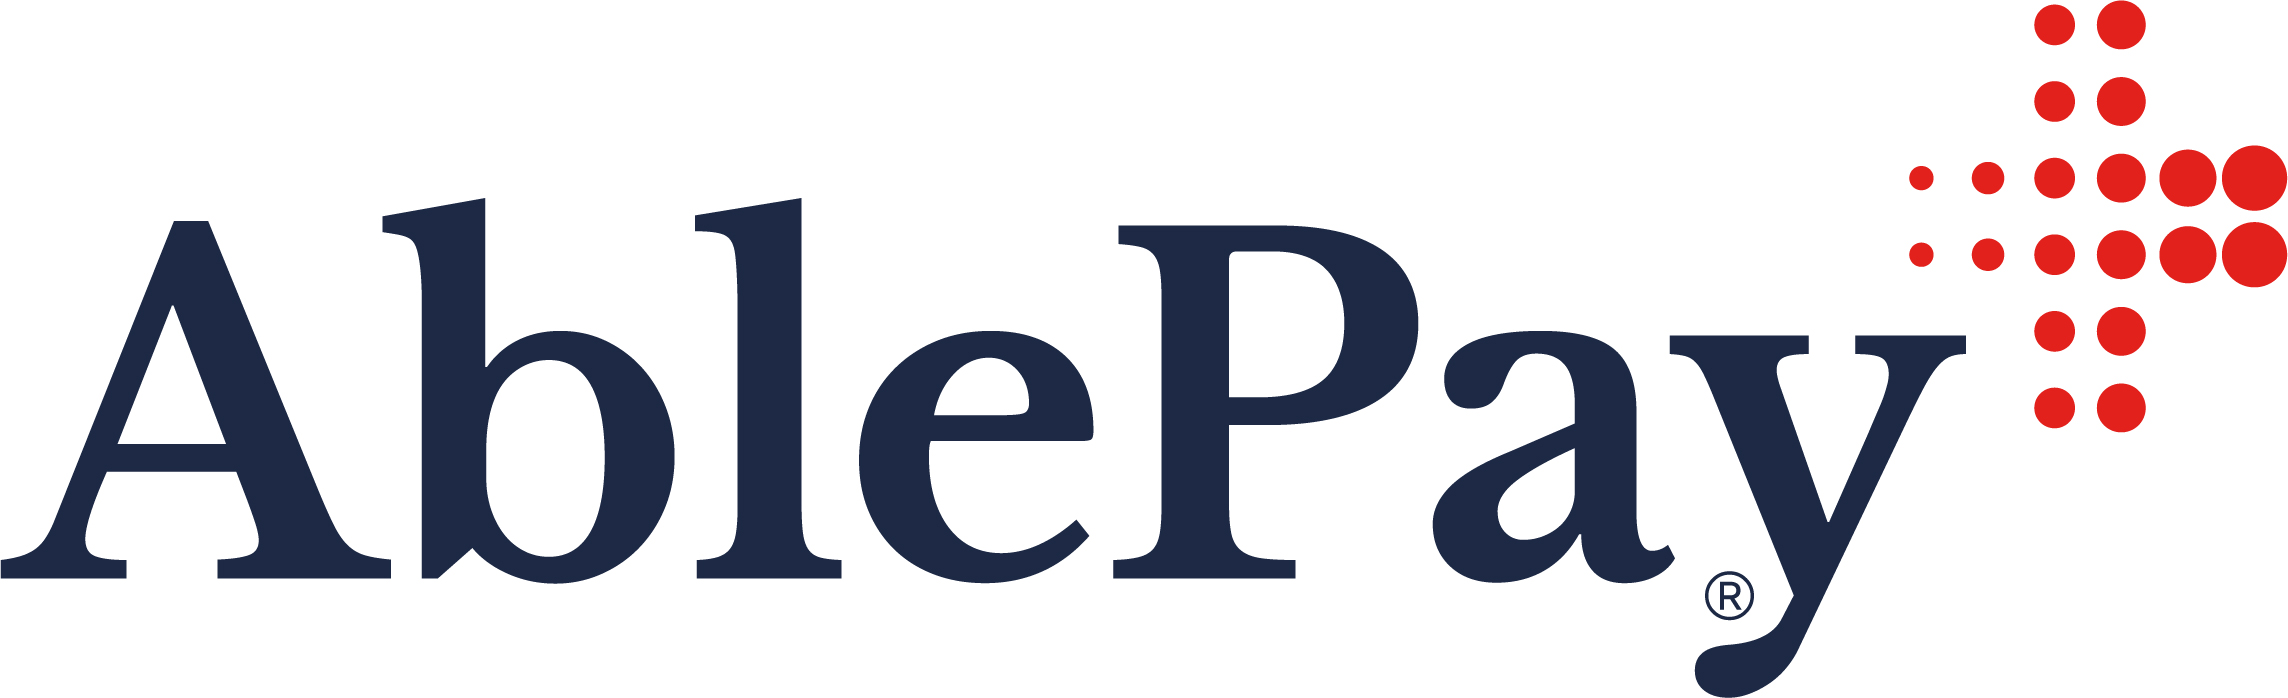 AblePay logo (no tag).jpg